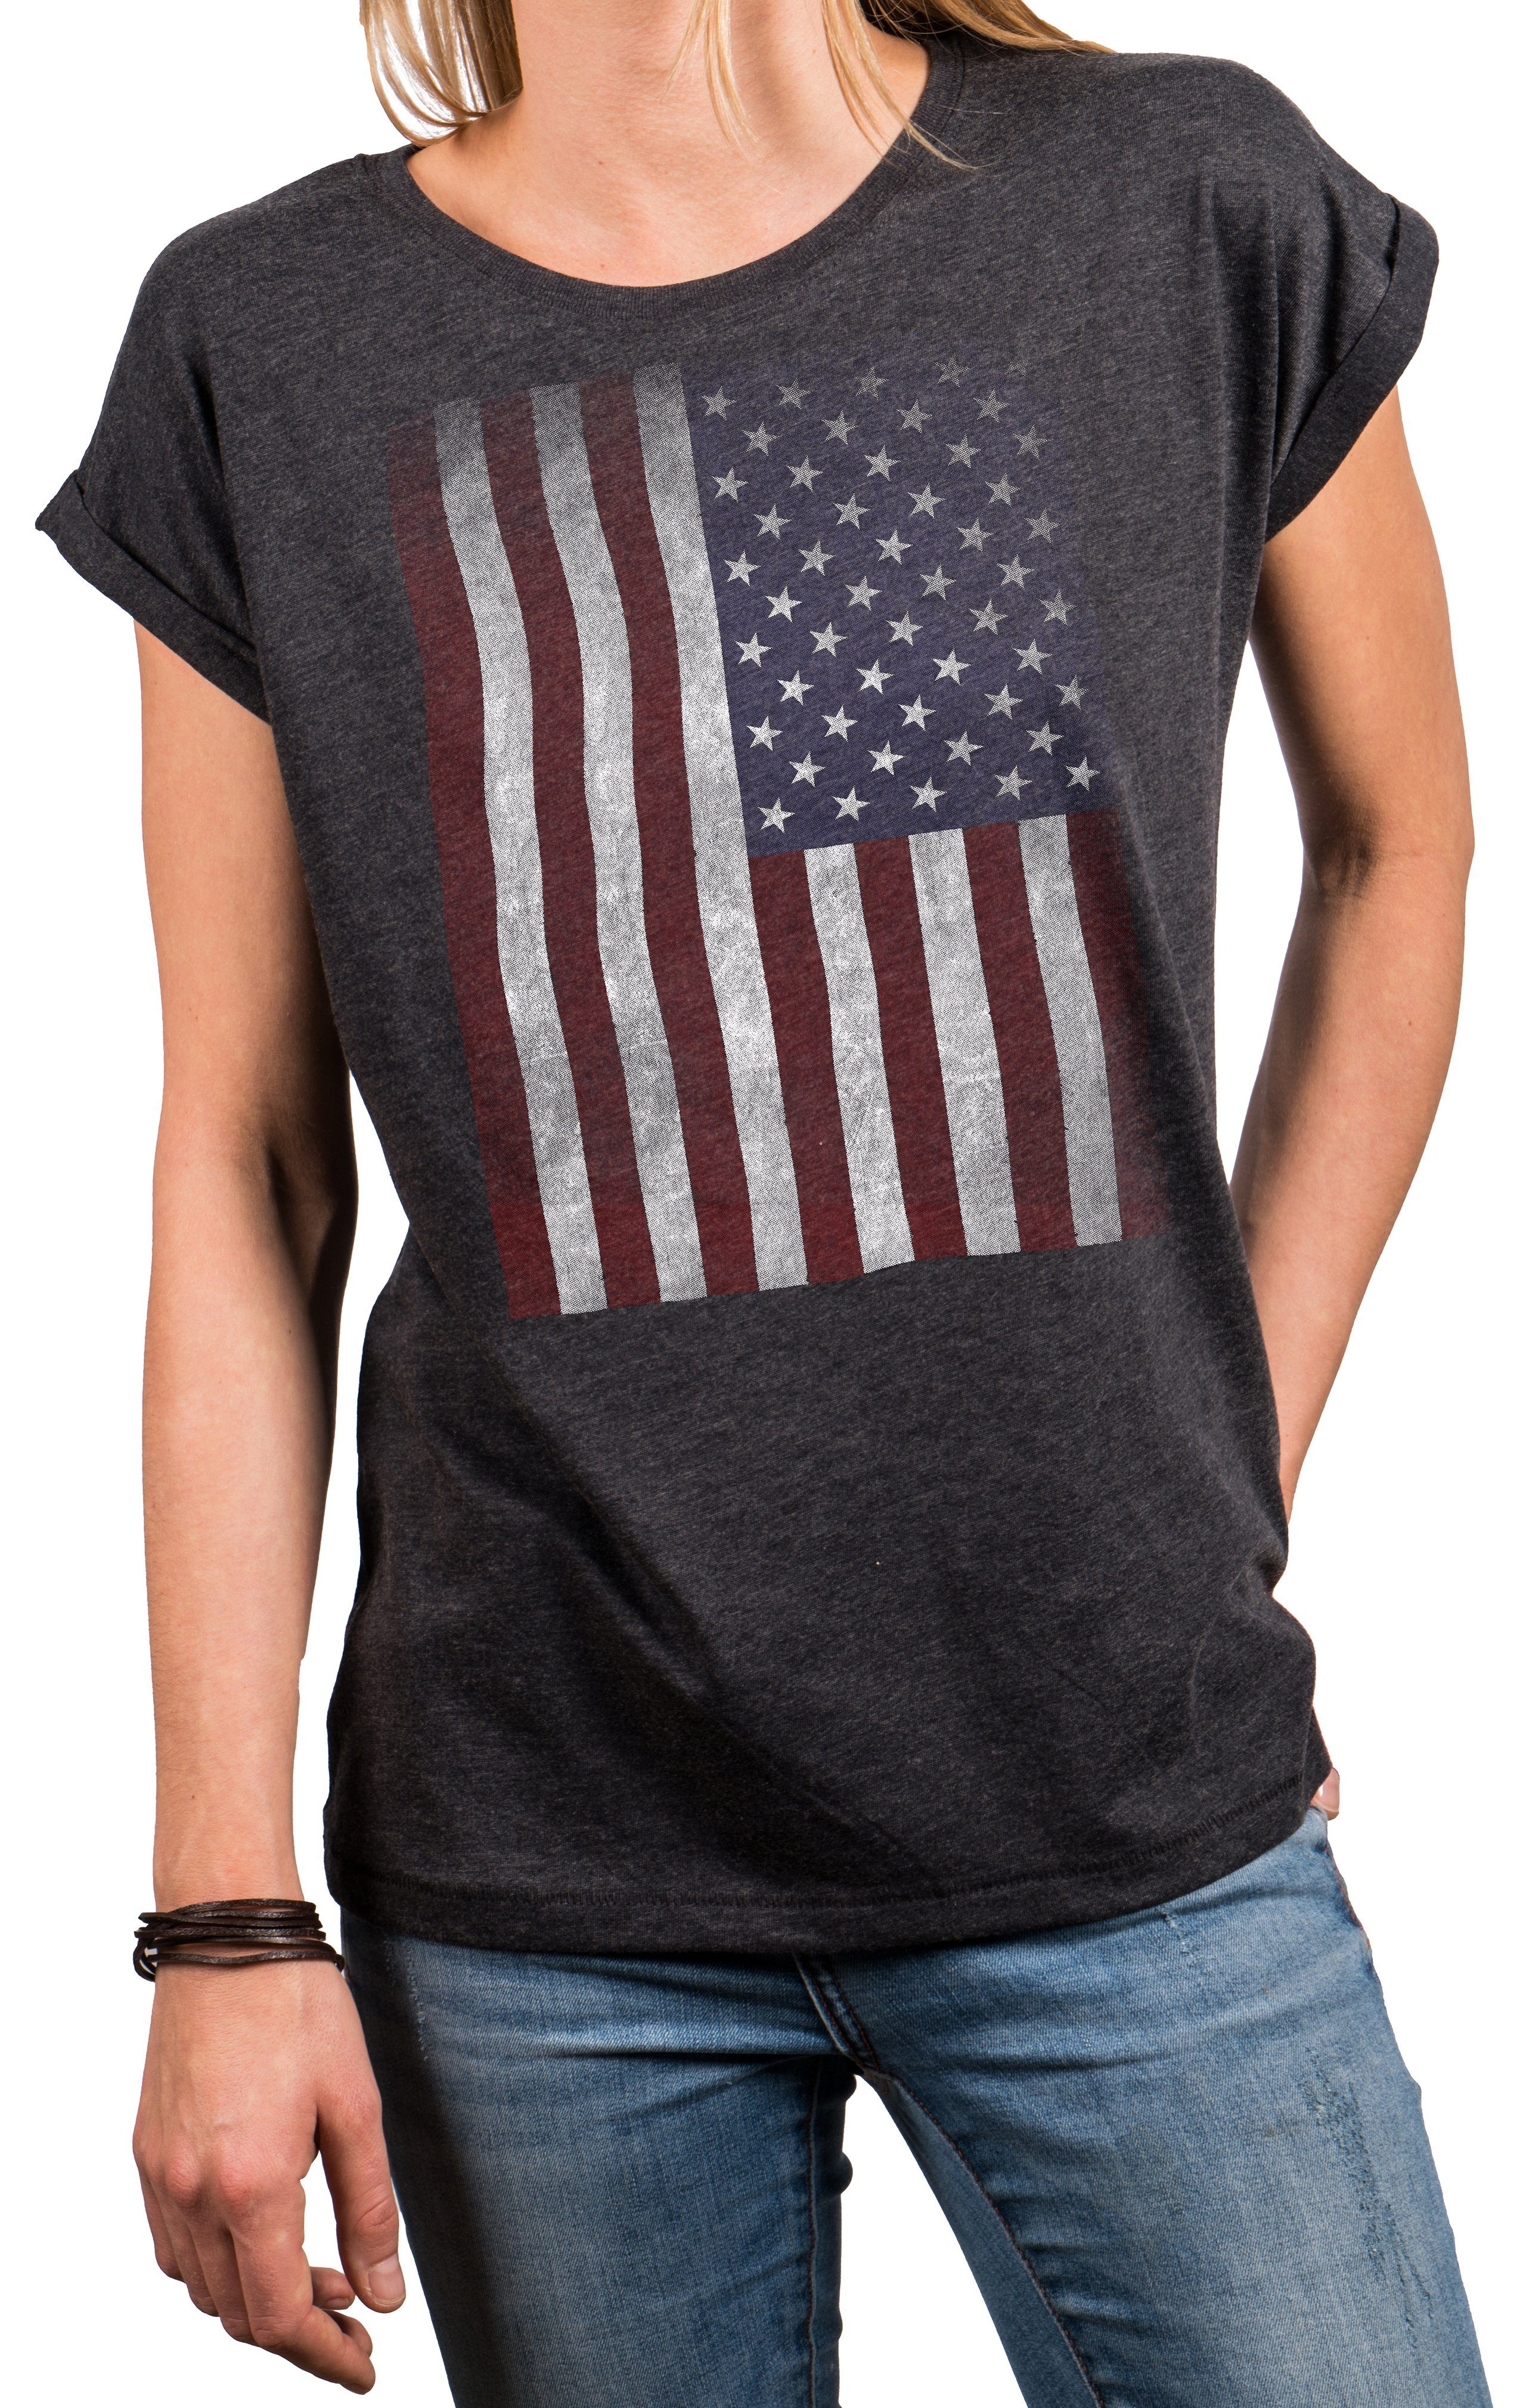 MAKAYA Print-Shirt Damen USA Flagge Vintage Amerika Fahne Tunika Top Sommer  Oberteile (Kurzarm, schwarz, grau, blau) Baumwolle, große Größen